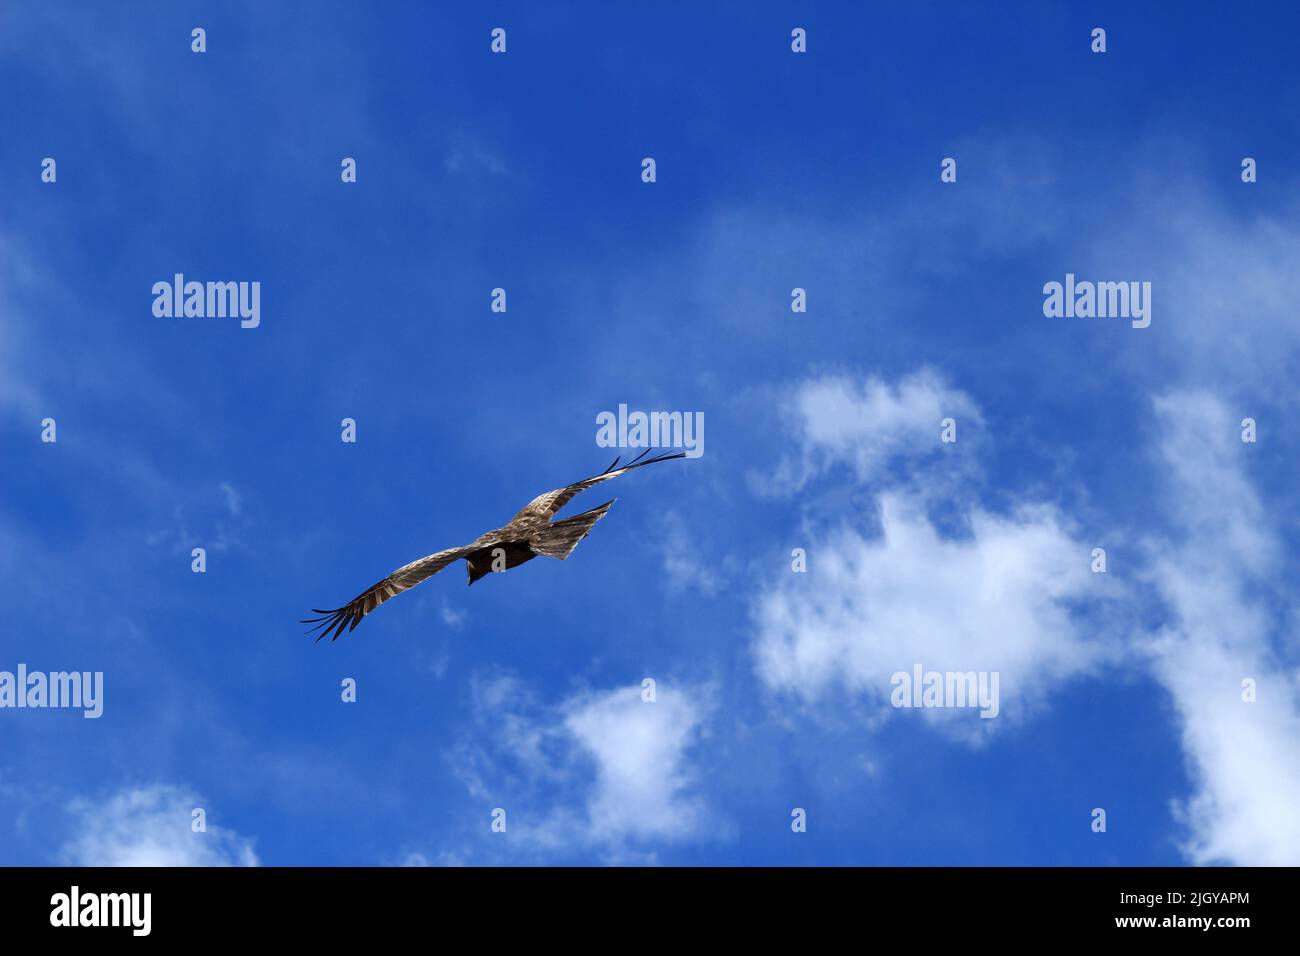 Black kite flying freely in the blue sky Stock Photo